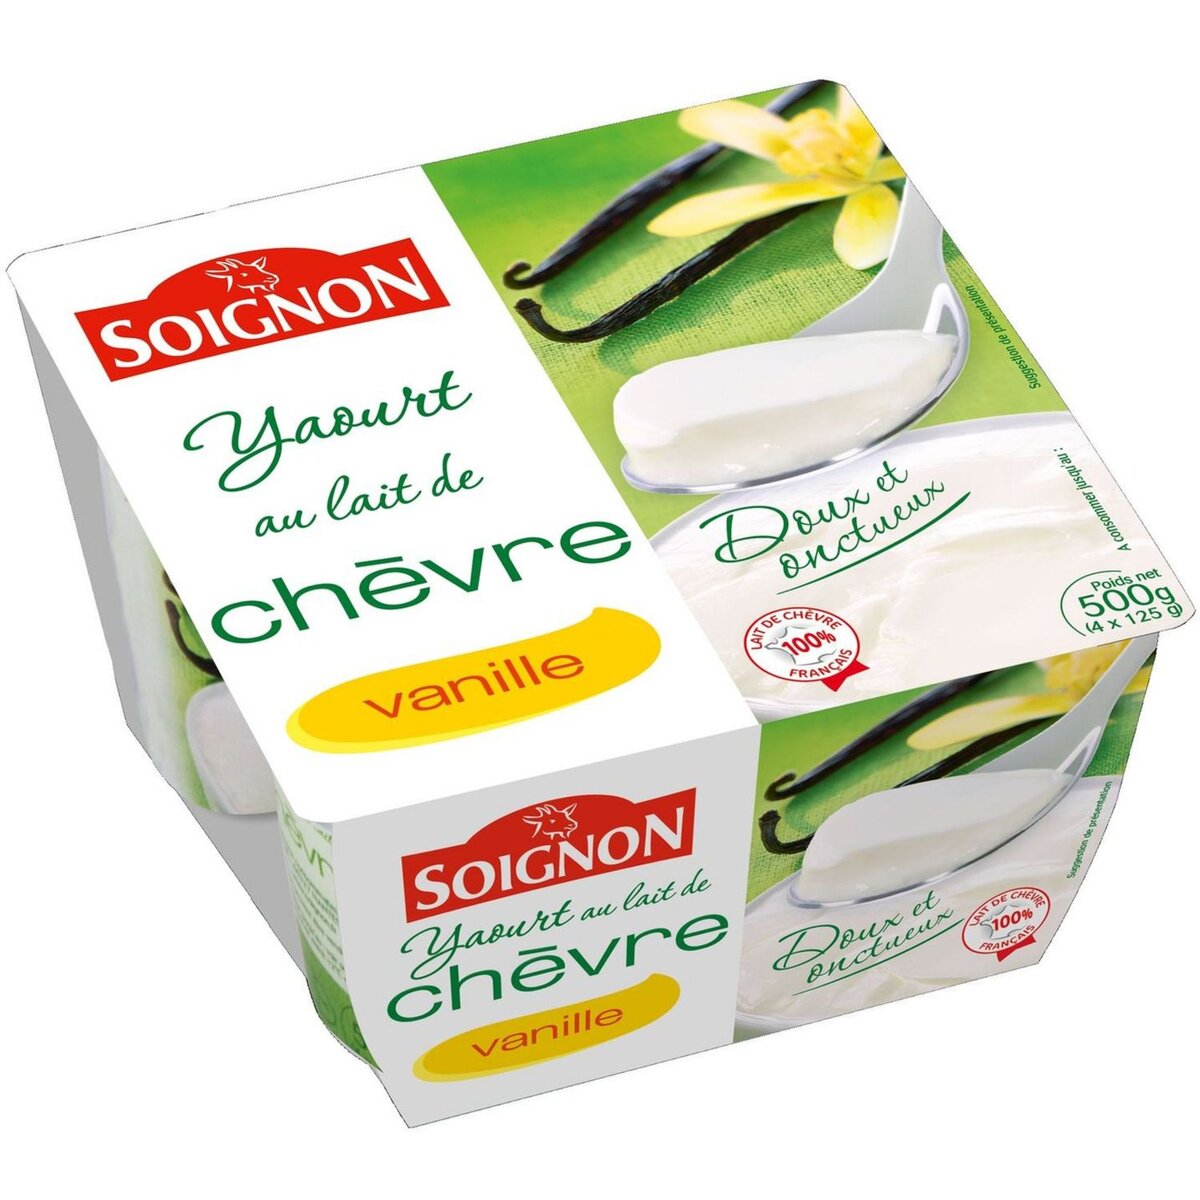 SOIGNON Soignon yt 0% chevre vanil x4